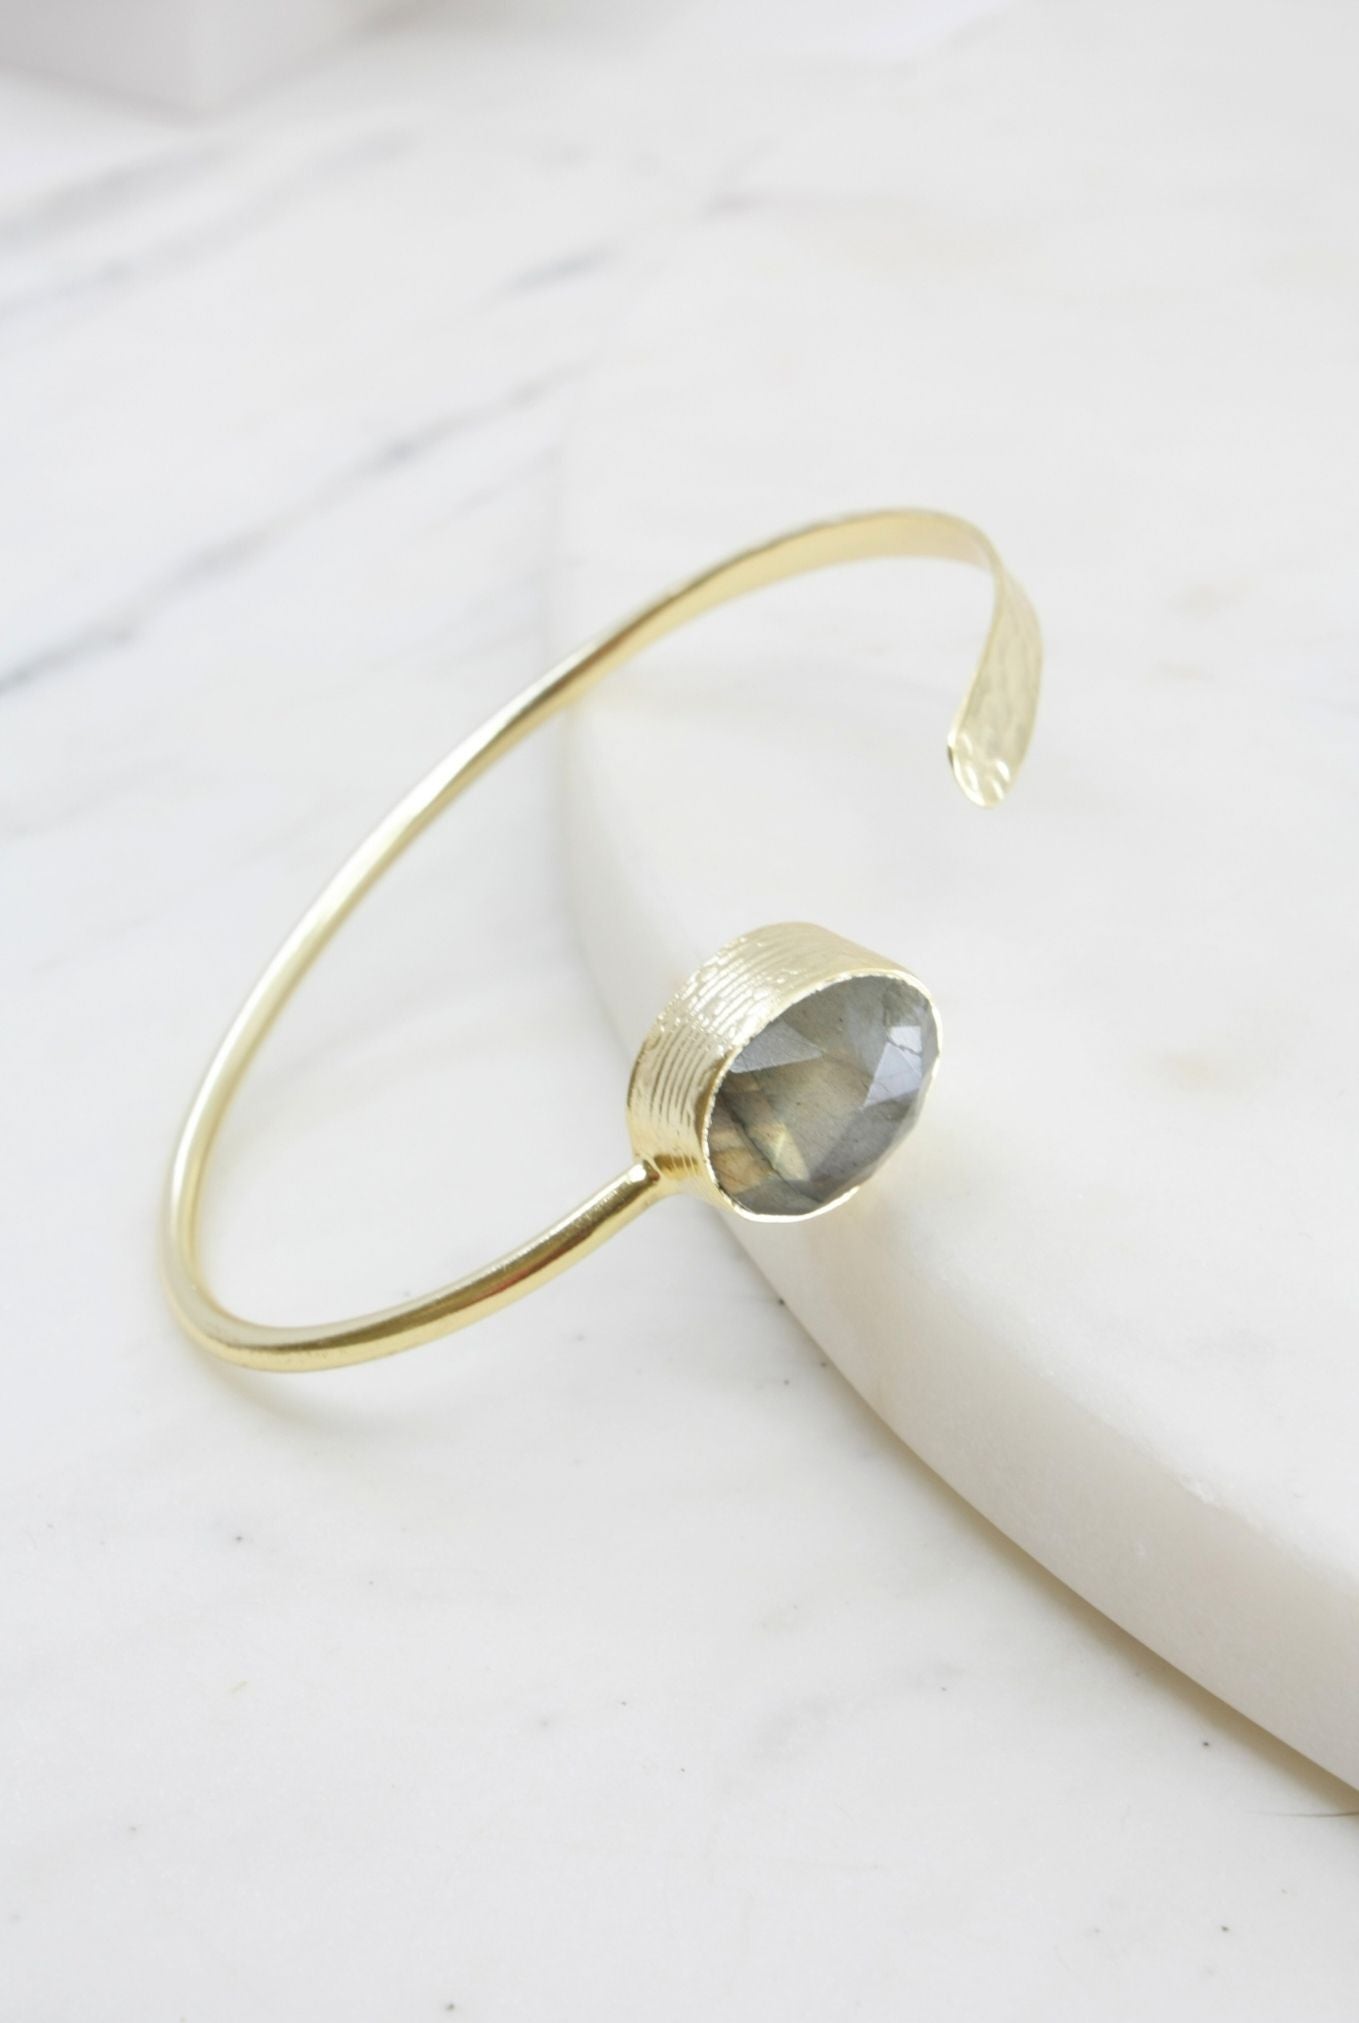 Gold Cuff Bracelet with Labradorite Accent Stone